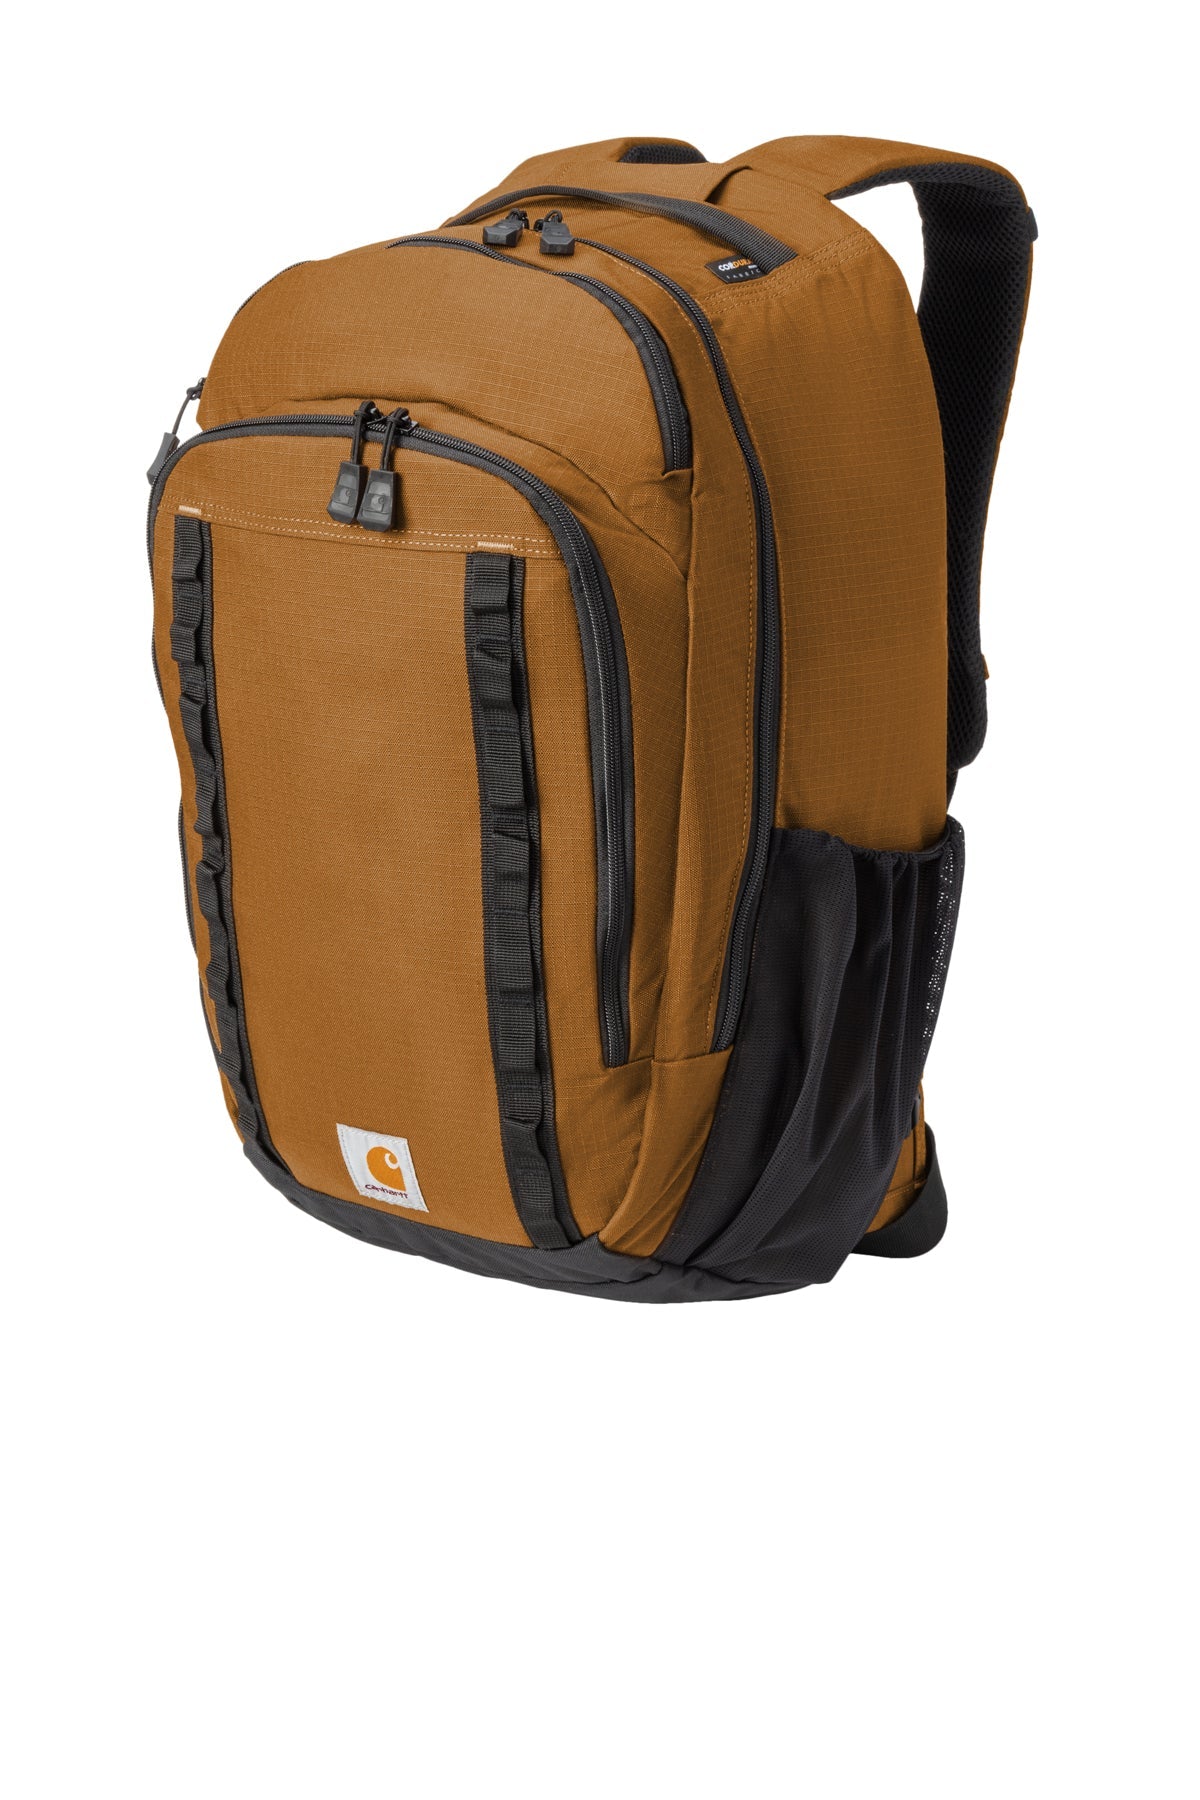 Carhartt 25L Ripstop Customized Backpacks, Brown